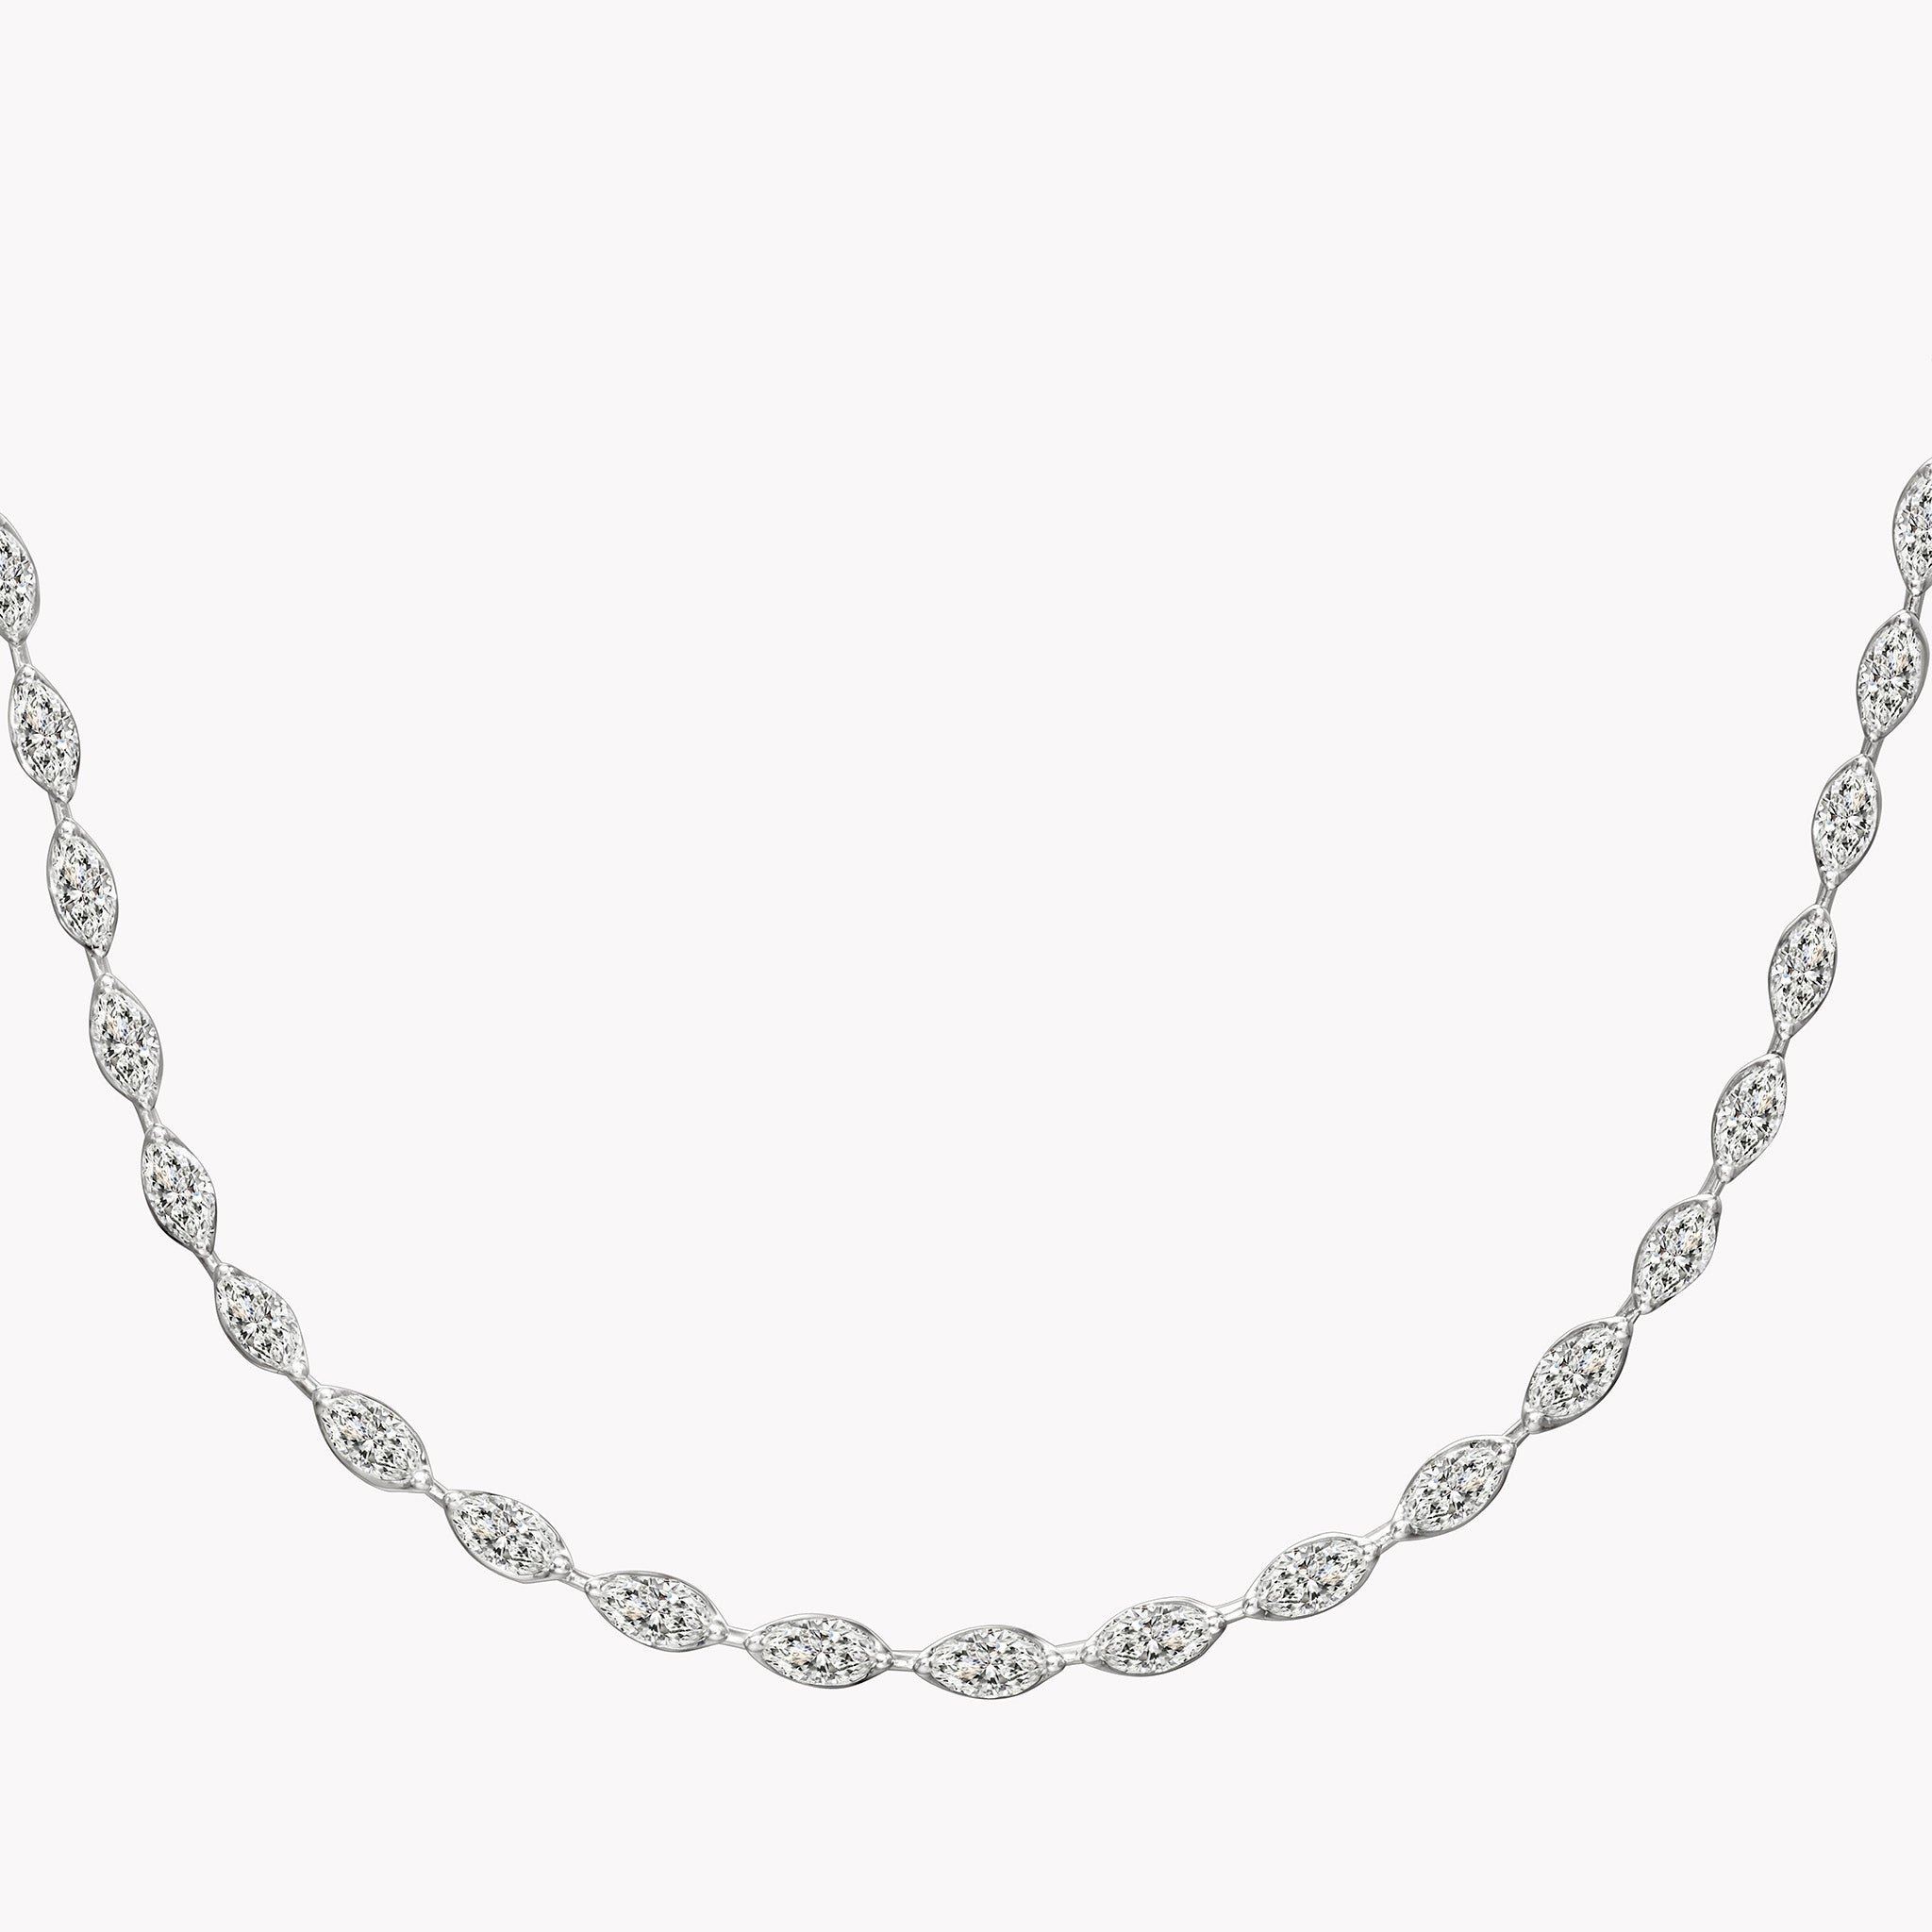 The Full Elle Diamond Necklace